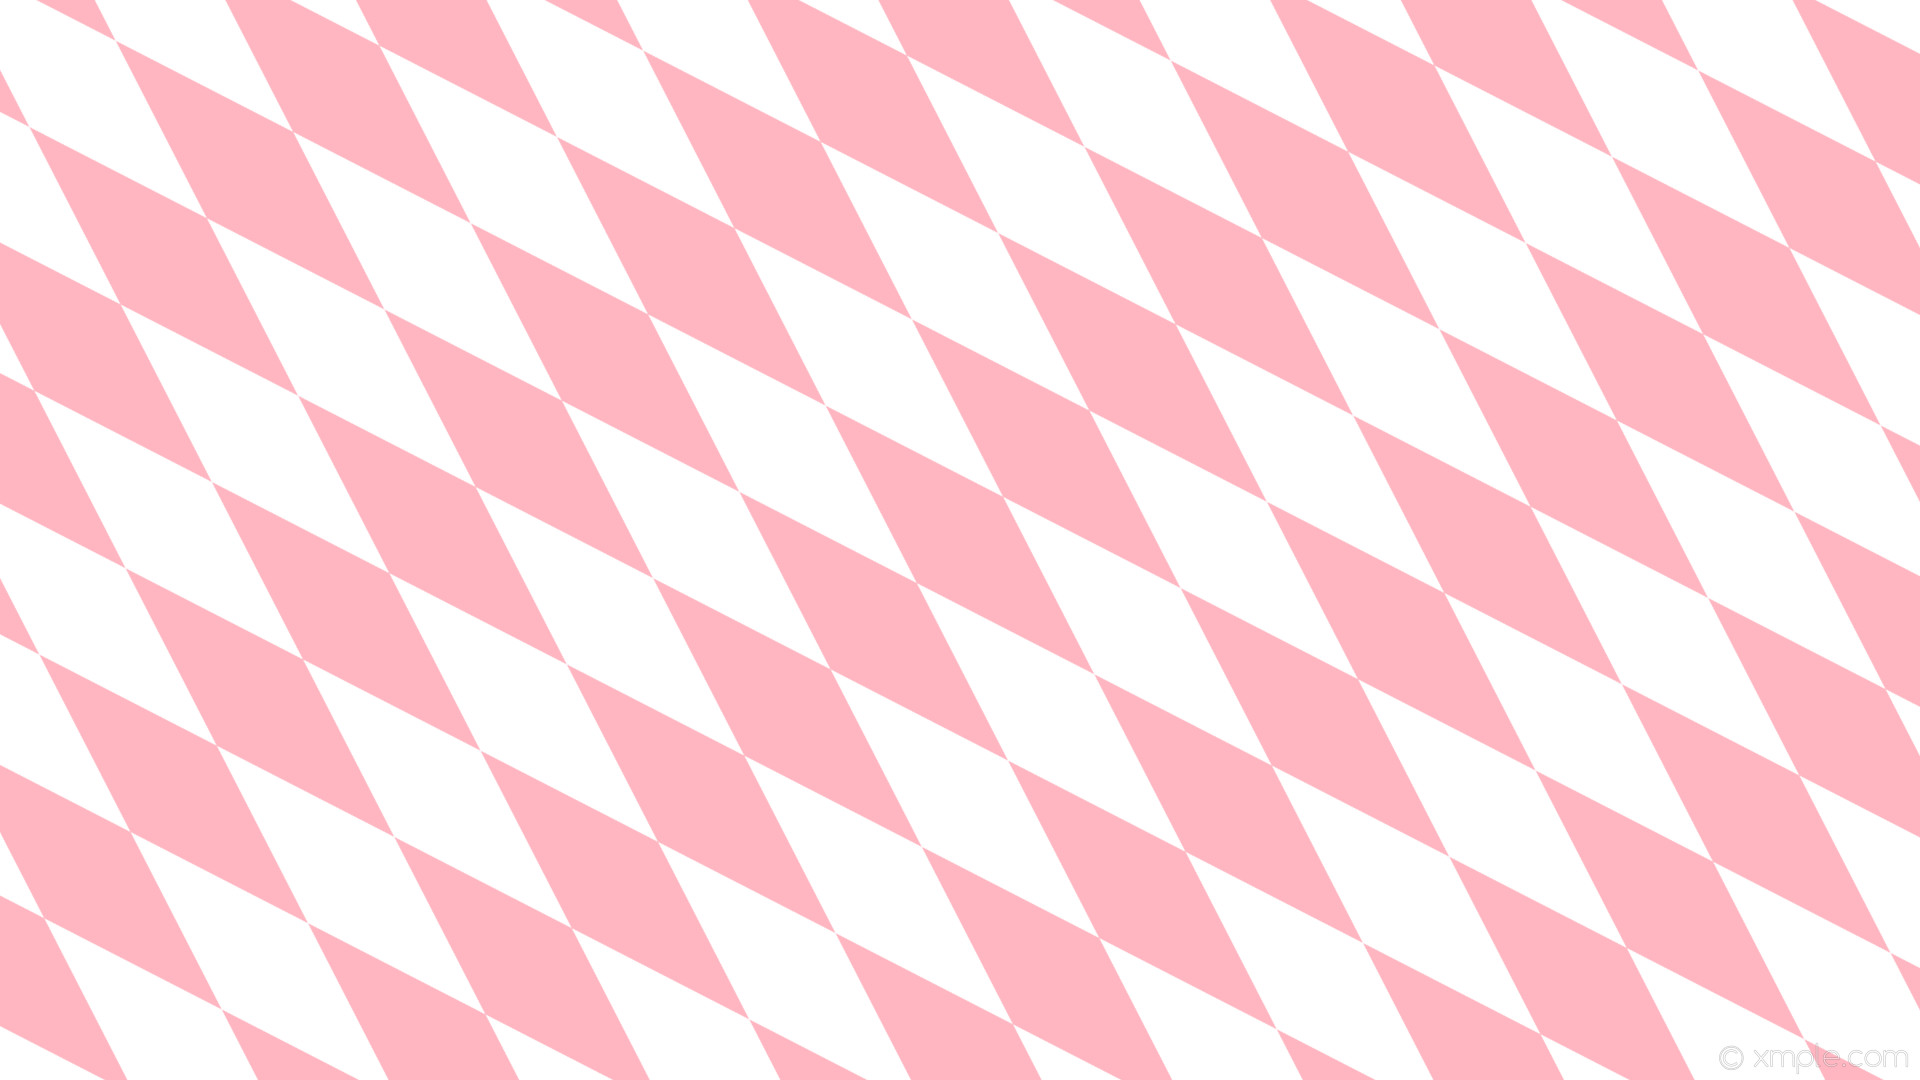 1920x1080 wallpaper pink diamond white lozenge rhombus light pink #ffb6c1 #ffffff  135Â° 380px 122px